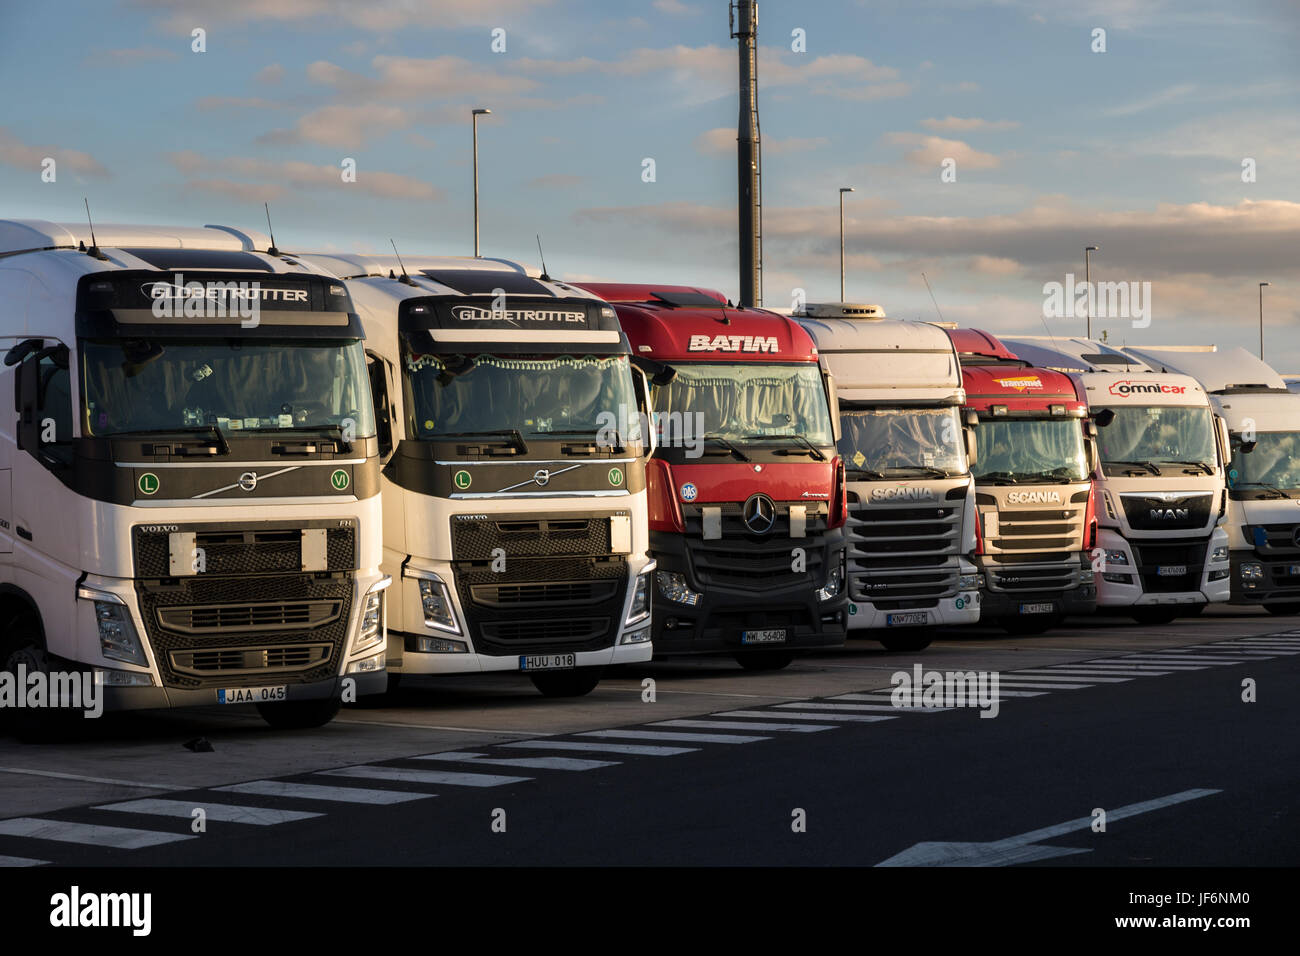 BELGIUM - JUN 23, 2017: Truck overnight parking along the E17 highway. Stock Photo